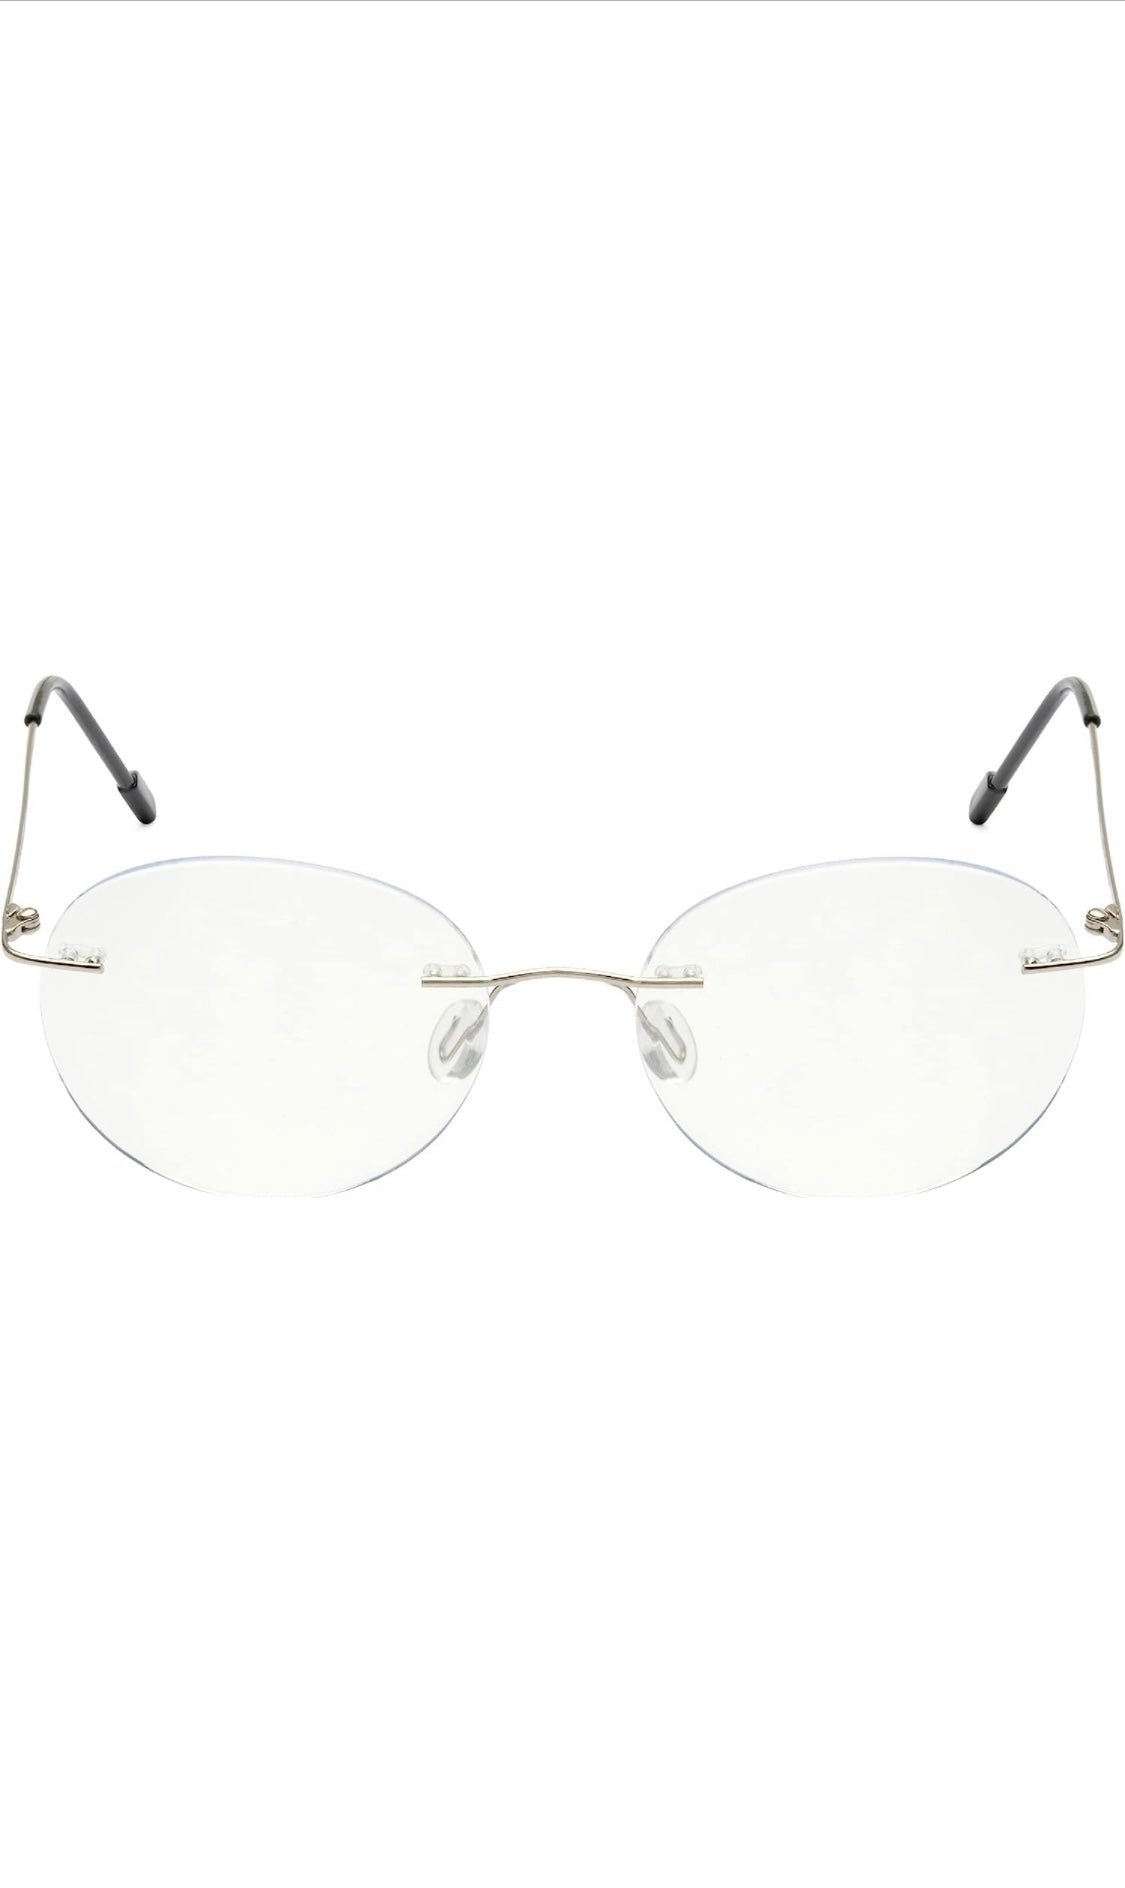 Jodykoes® Rimless Round Frame Zero Power Anti Glare Spectacle For Men and Women | Unisex Computer Eyeglasses Light Weight Round Frameless Eyewear (Silver) - Jodykoes ®